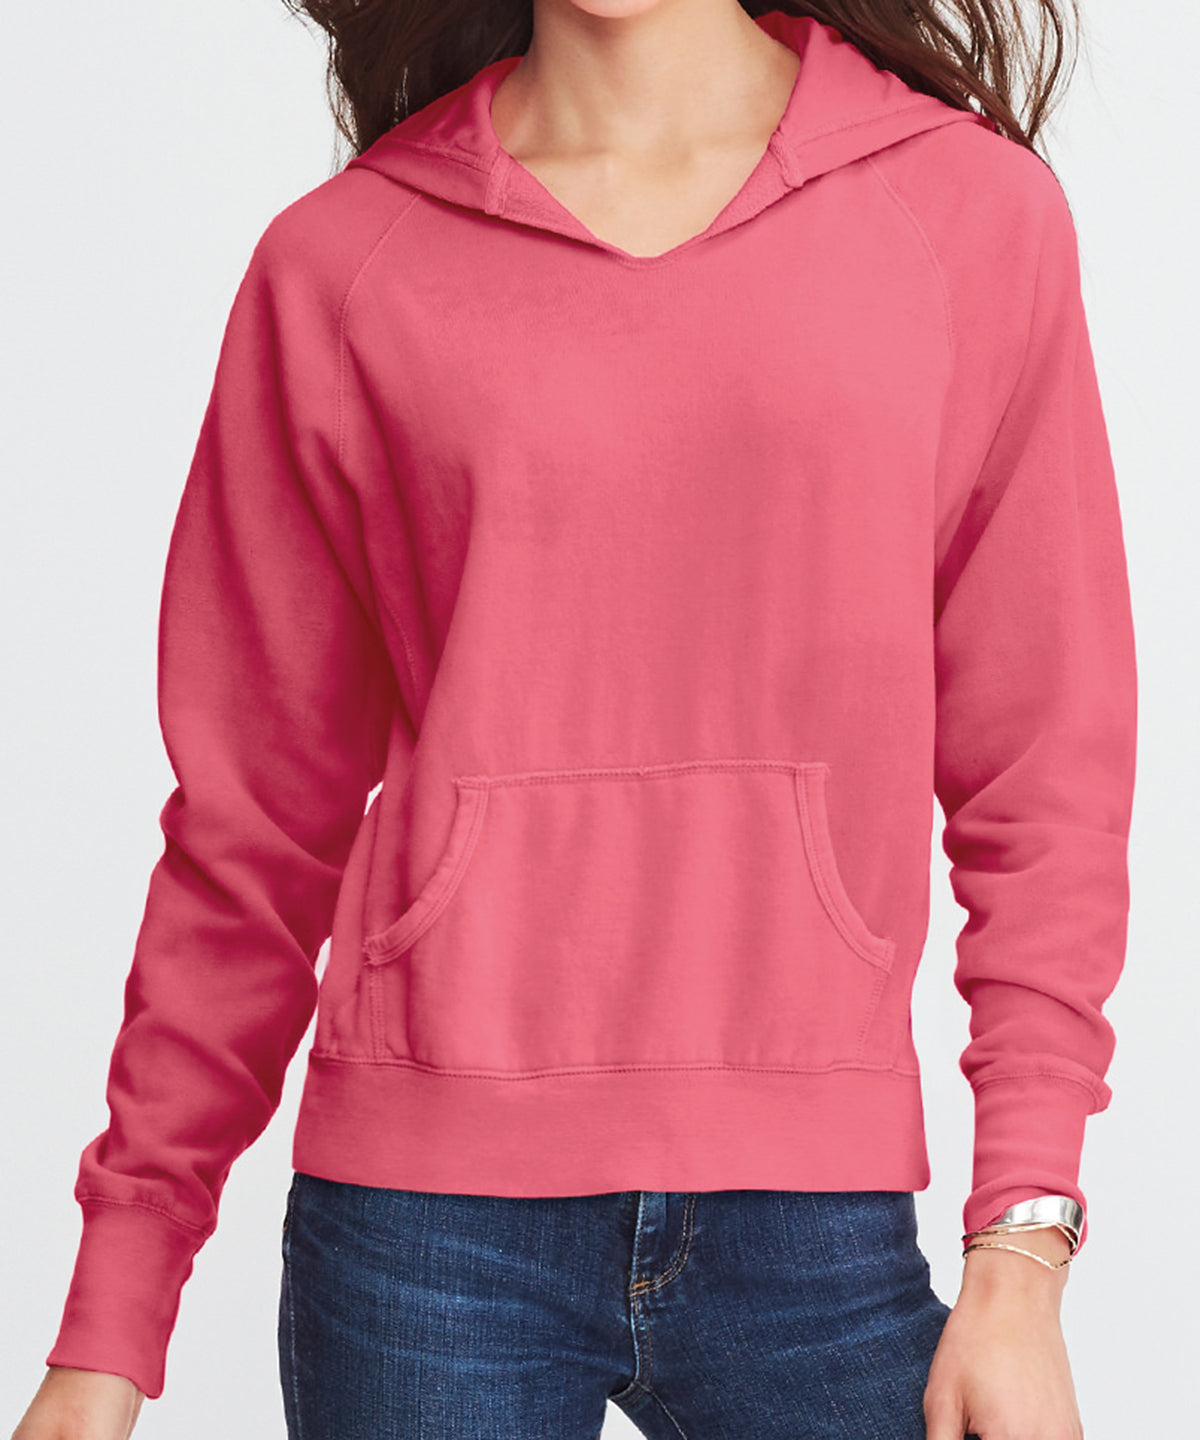 Hettupeysur - Women's Hooded Sweatshirt